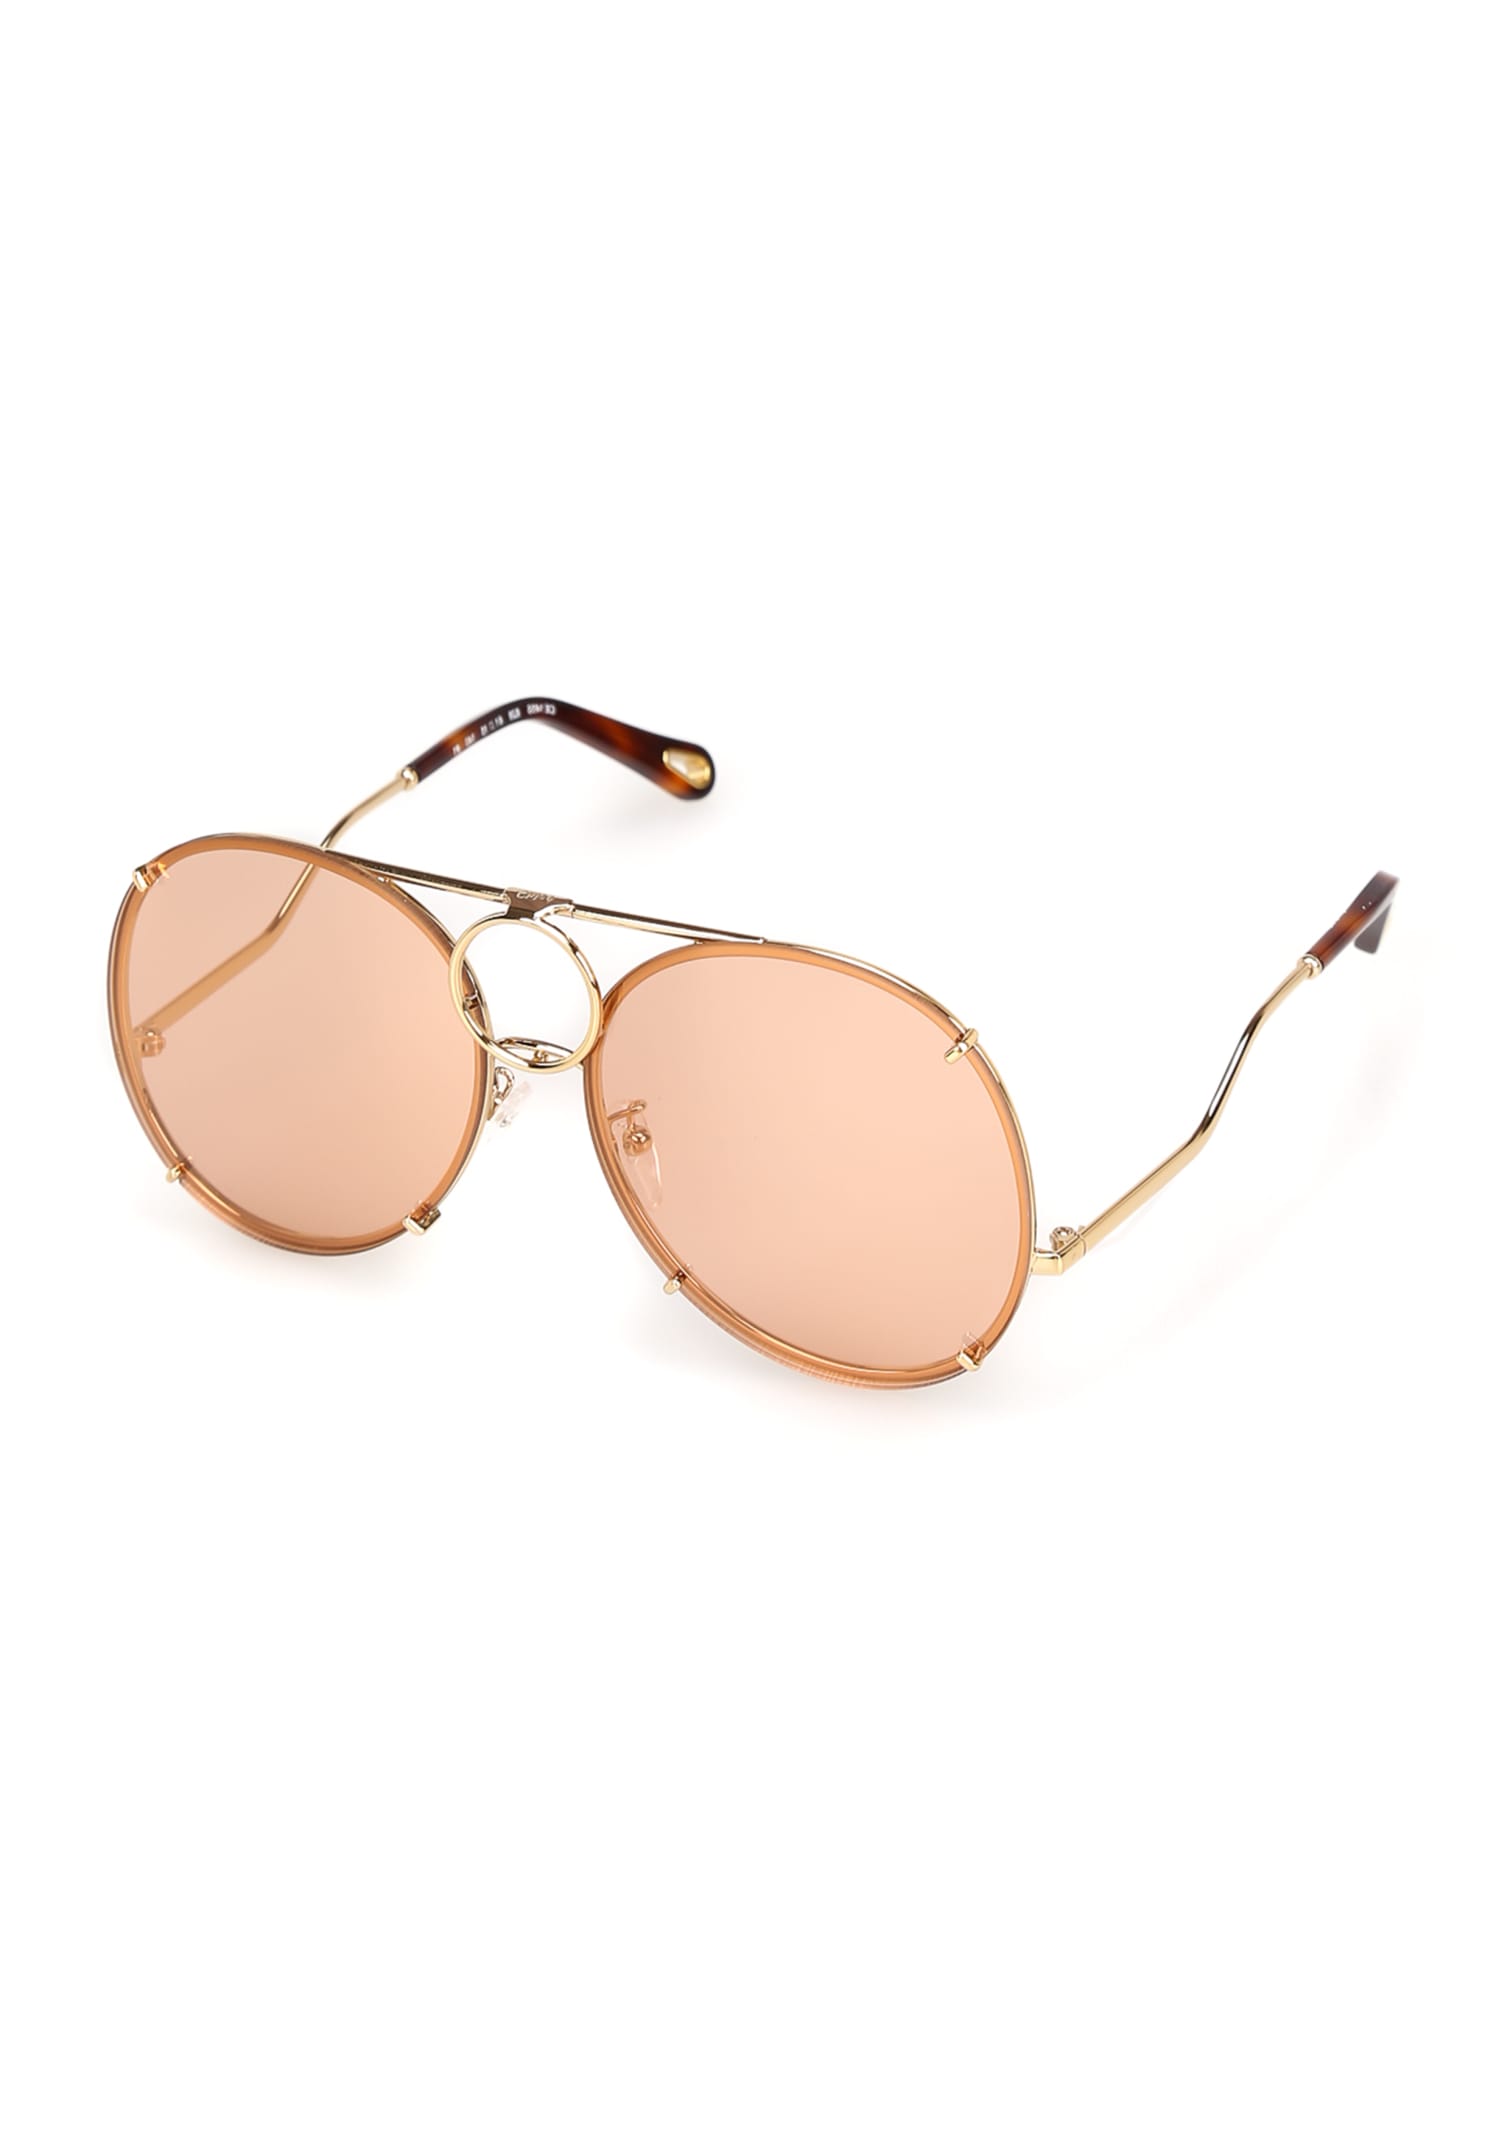 Chloé Eyewear CE145S 38298 Sunglasses